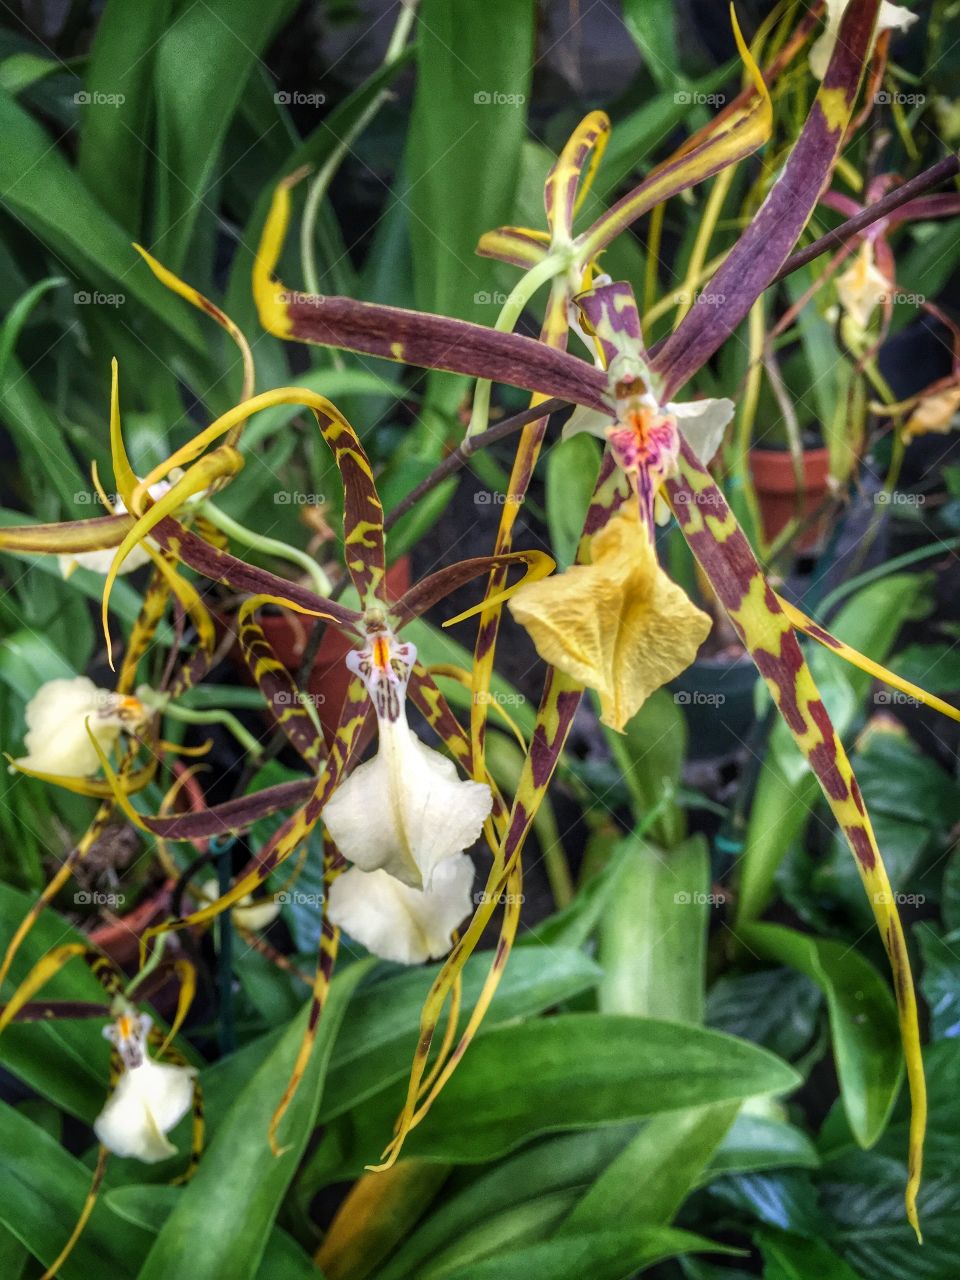 Spider orchids